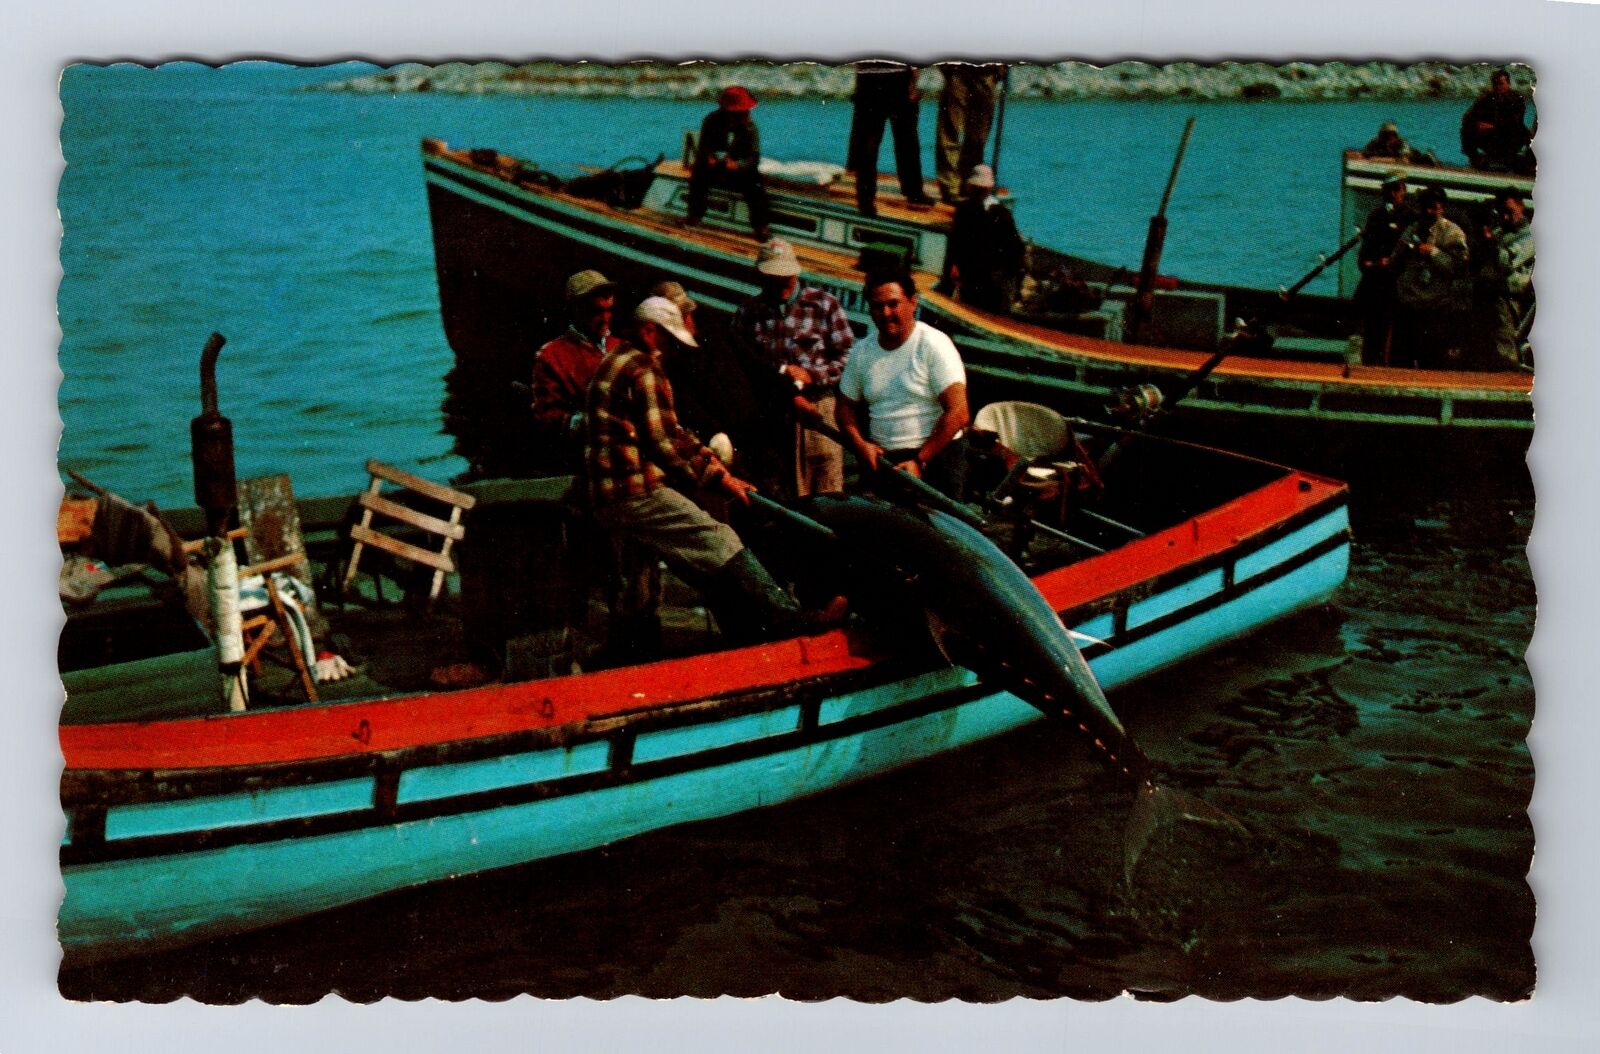 Wedgeport-Nova Scotia, Boating a Bluefin Tuna, Souvenir Vintage Postcard